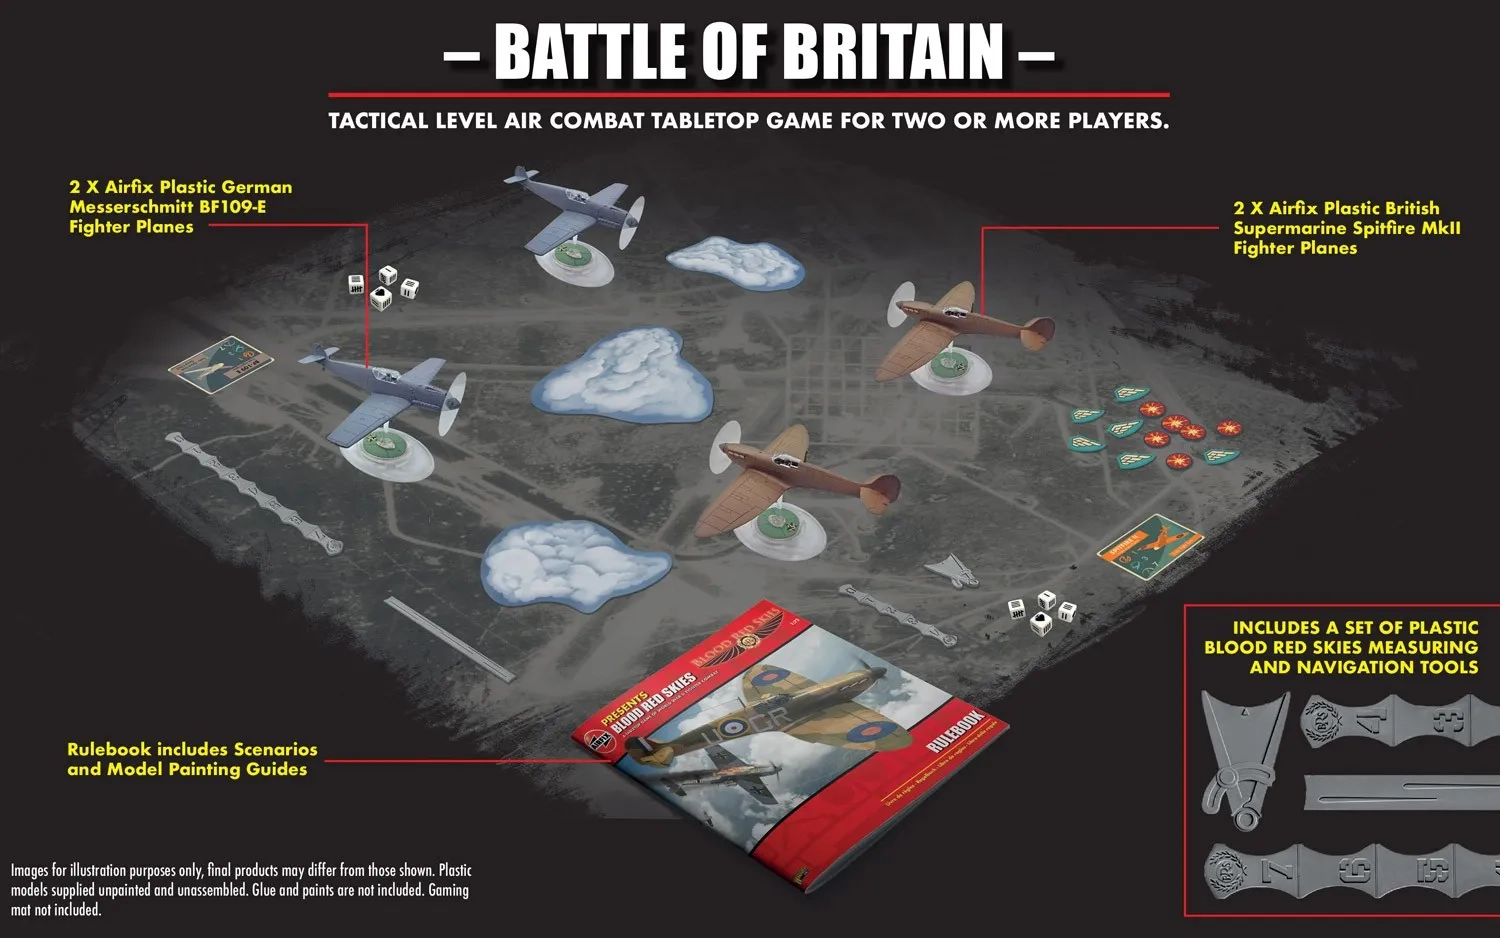 Airfix Blood Red Skies - Battle of Britain